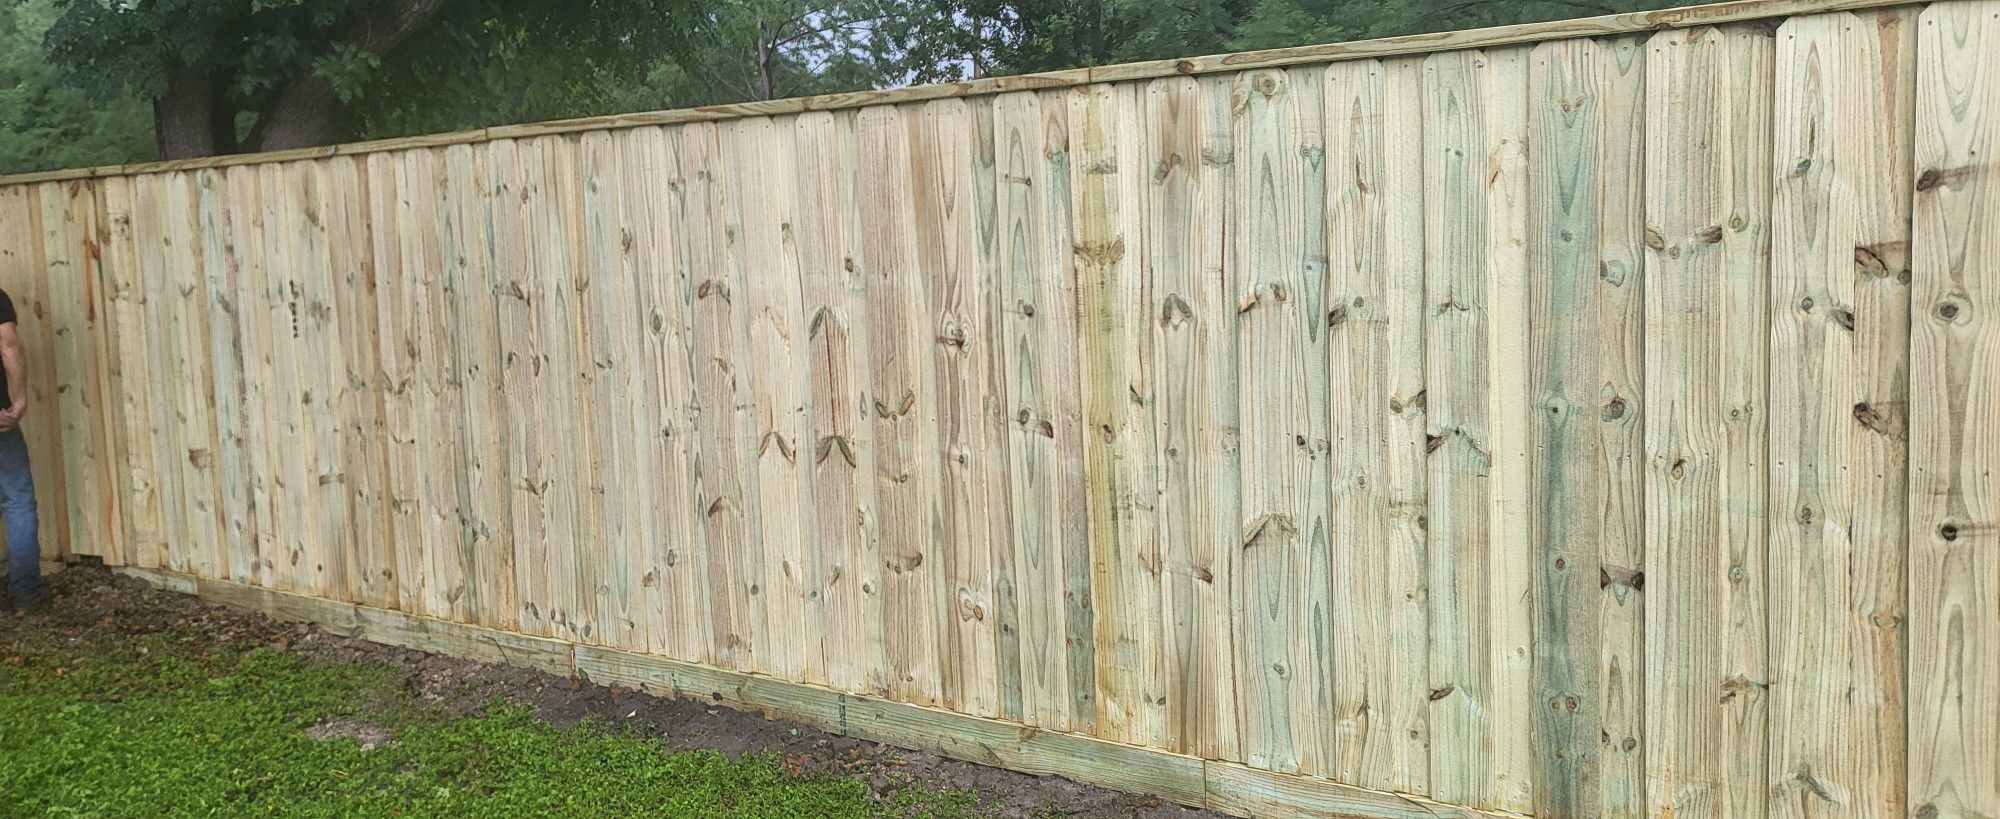 pine wood fence